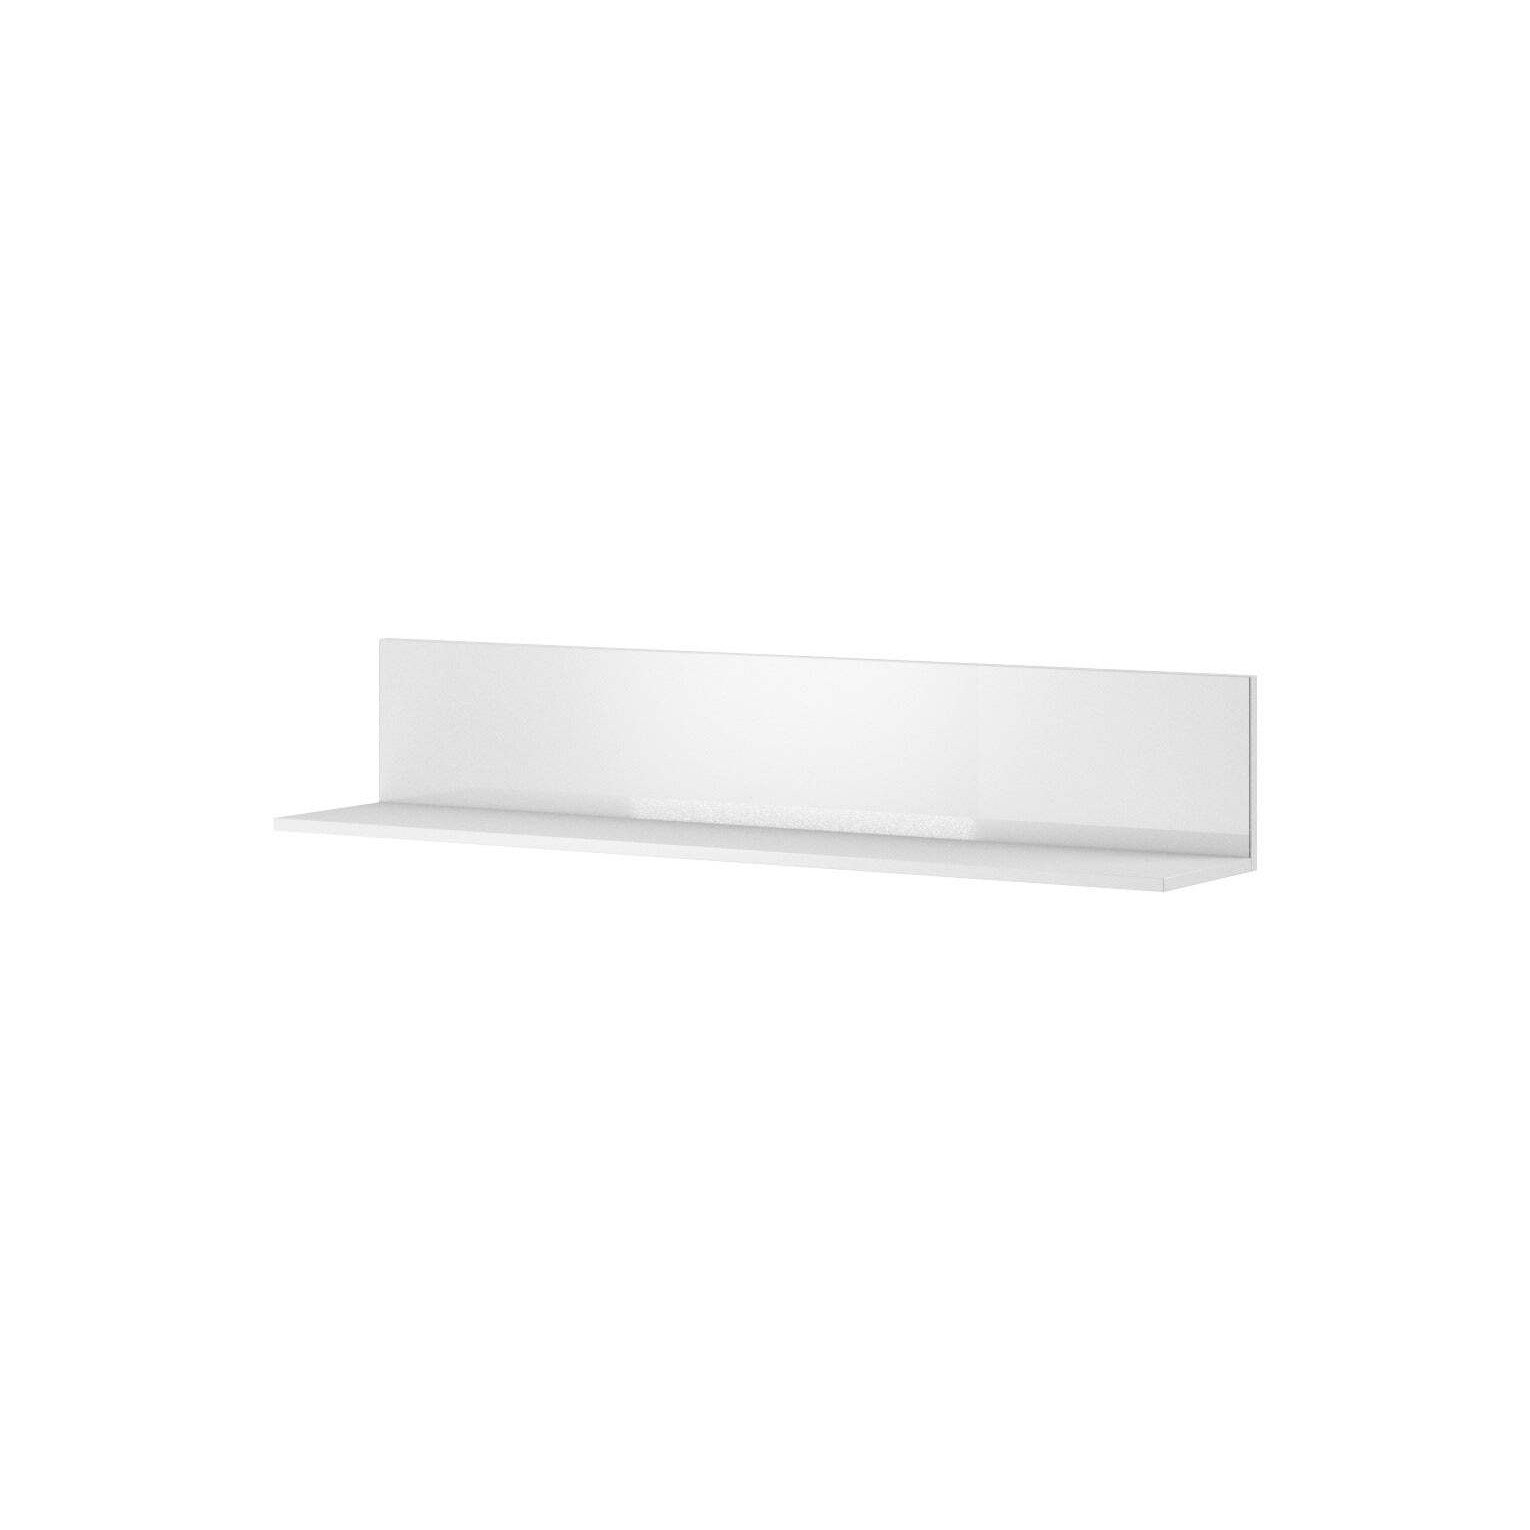 Helio 01 Wall Shelf 120cm - White Glass 120cm - image 1